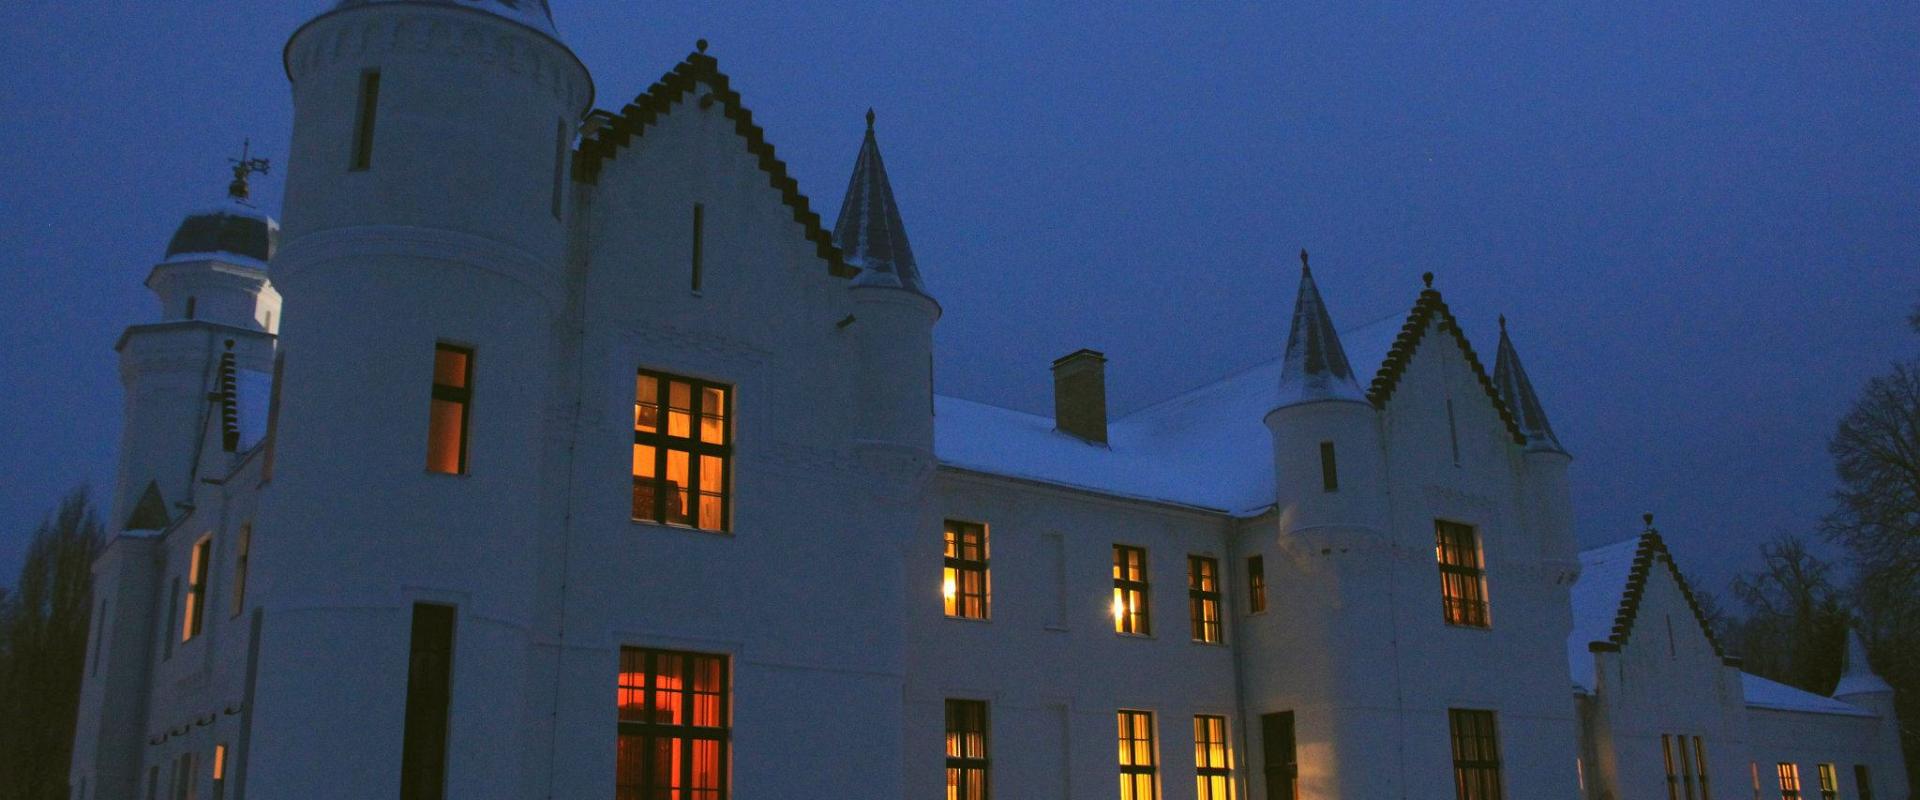 Das Schloss Alatskivi nachts, während aus den Fenstern Licht dringt.